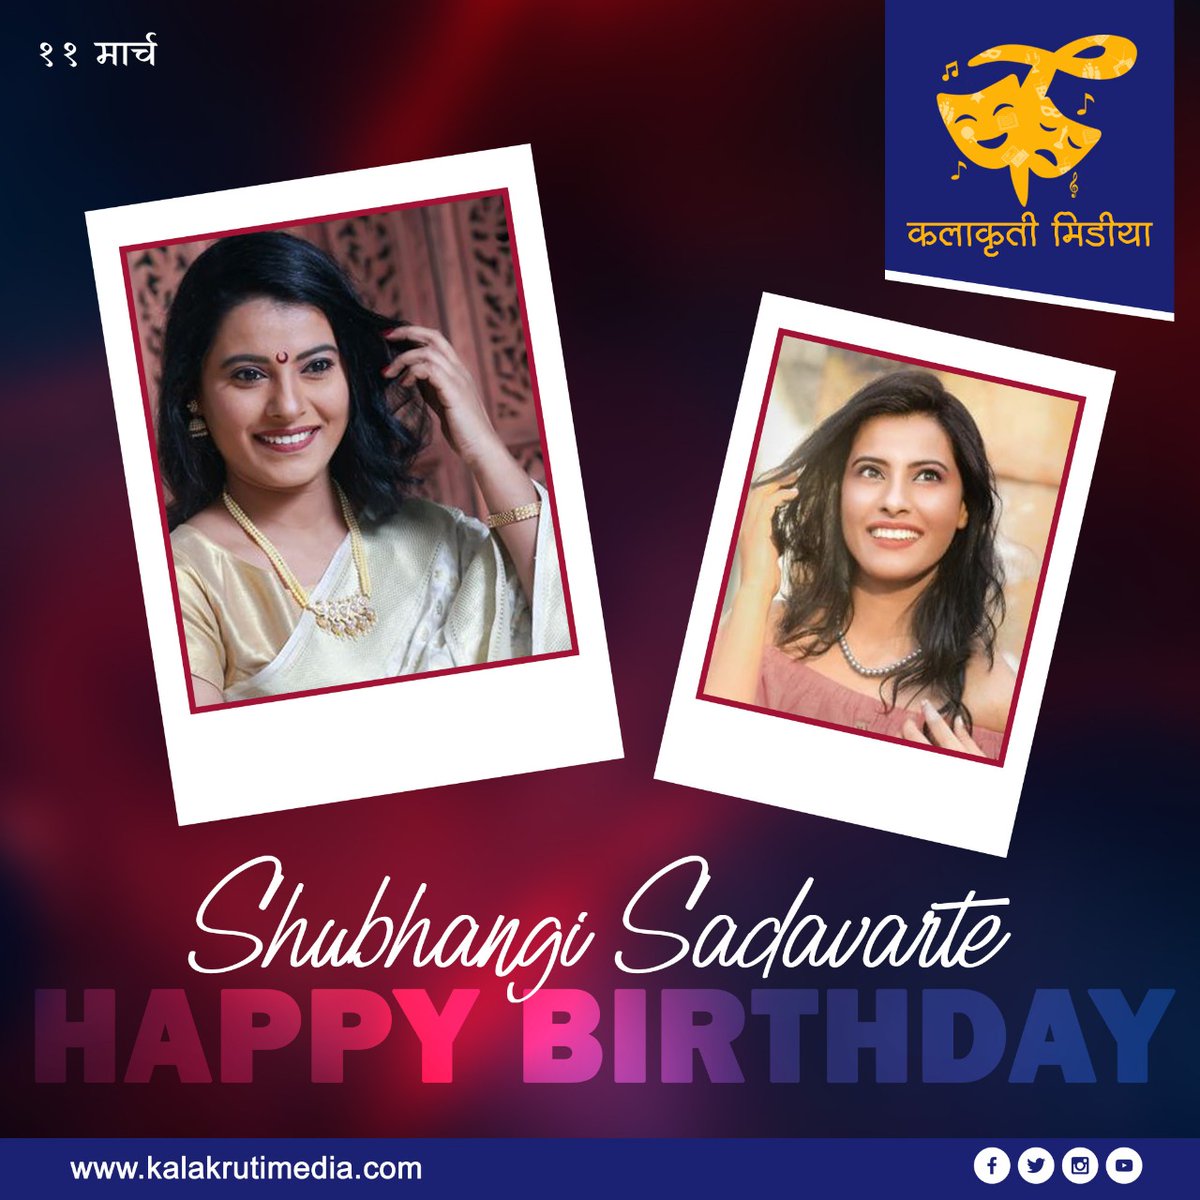 शुभांगी सदावर्ते यांना वाढदिवसाच्या हार्दिक शुभेच्छा

#shubhangisadavarte #happybirthday #birthday #actress #marathiactress #marathicelebrity #marathistar #marathi #marathimanus #maharashtra #kalakrutimedia